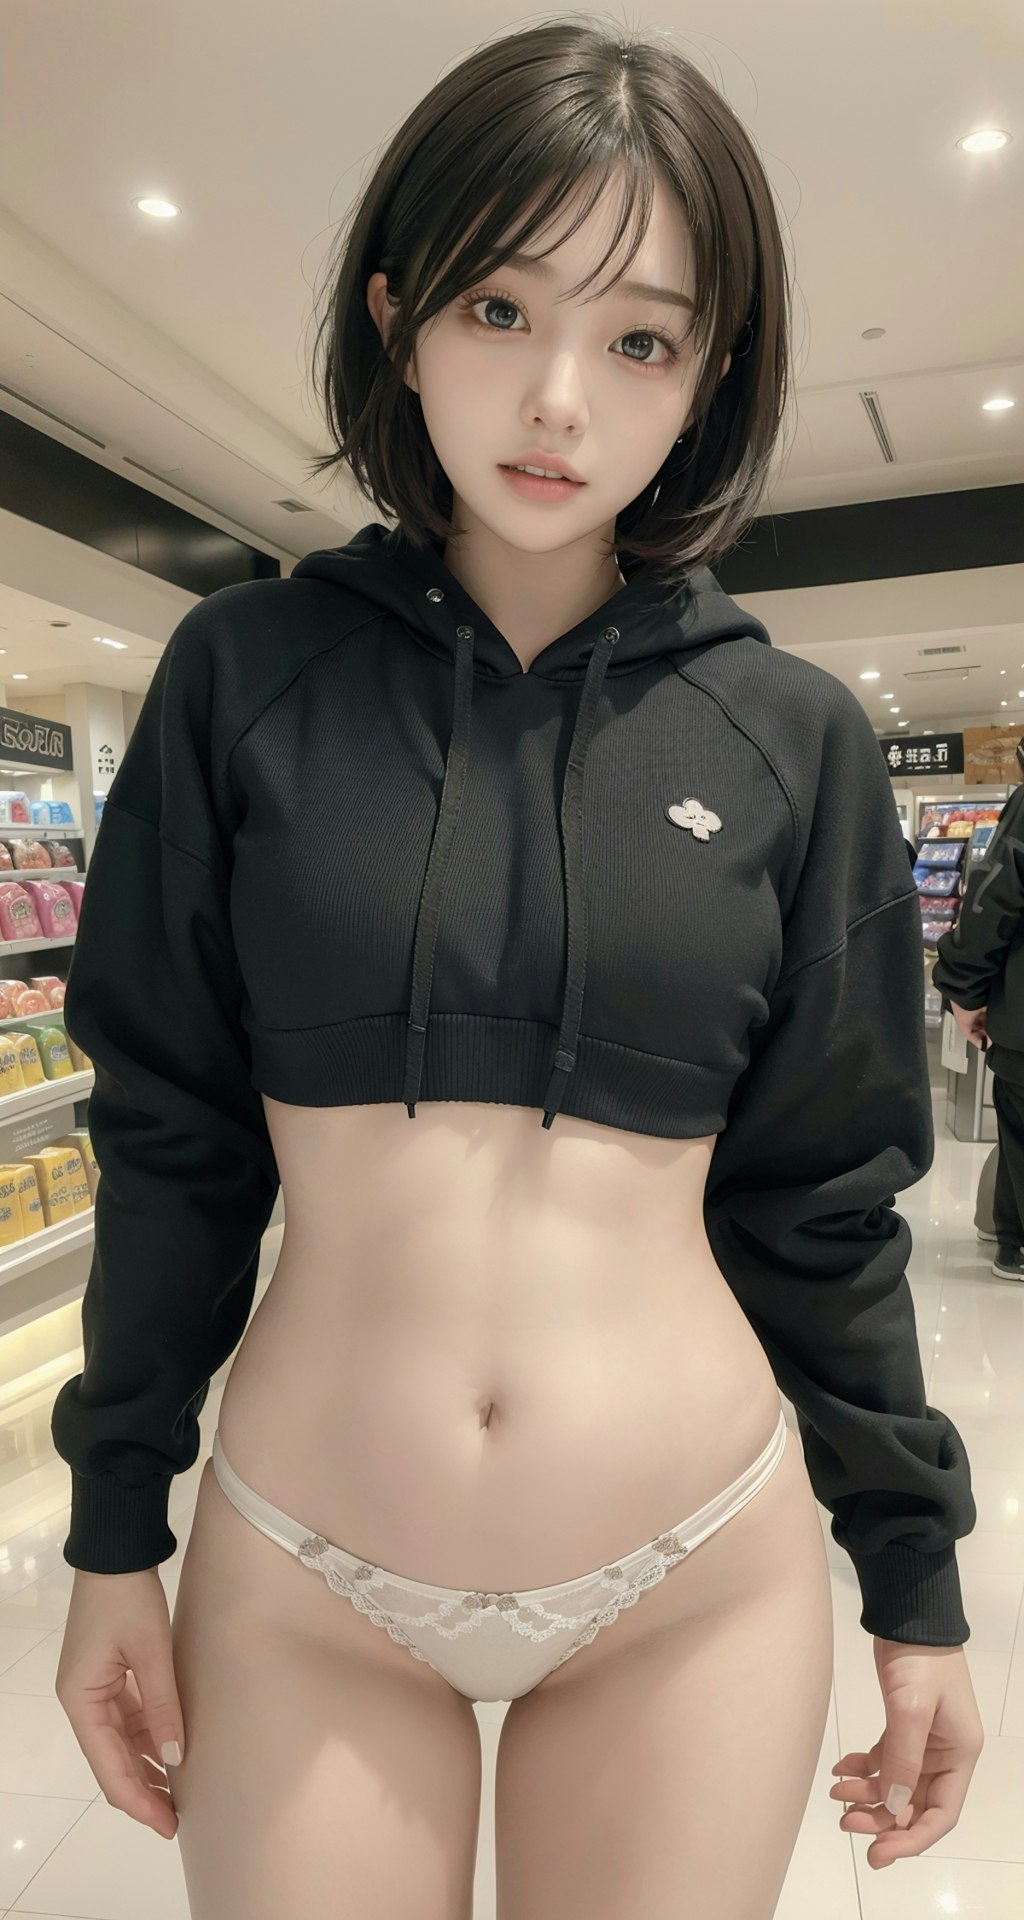 hoodie panties Shopping mall,